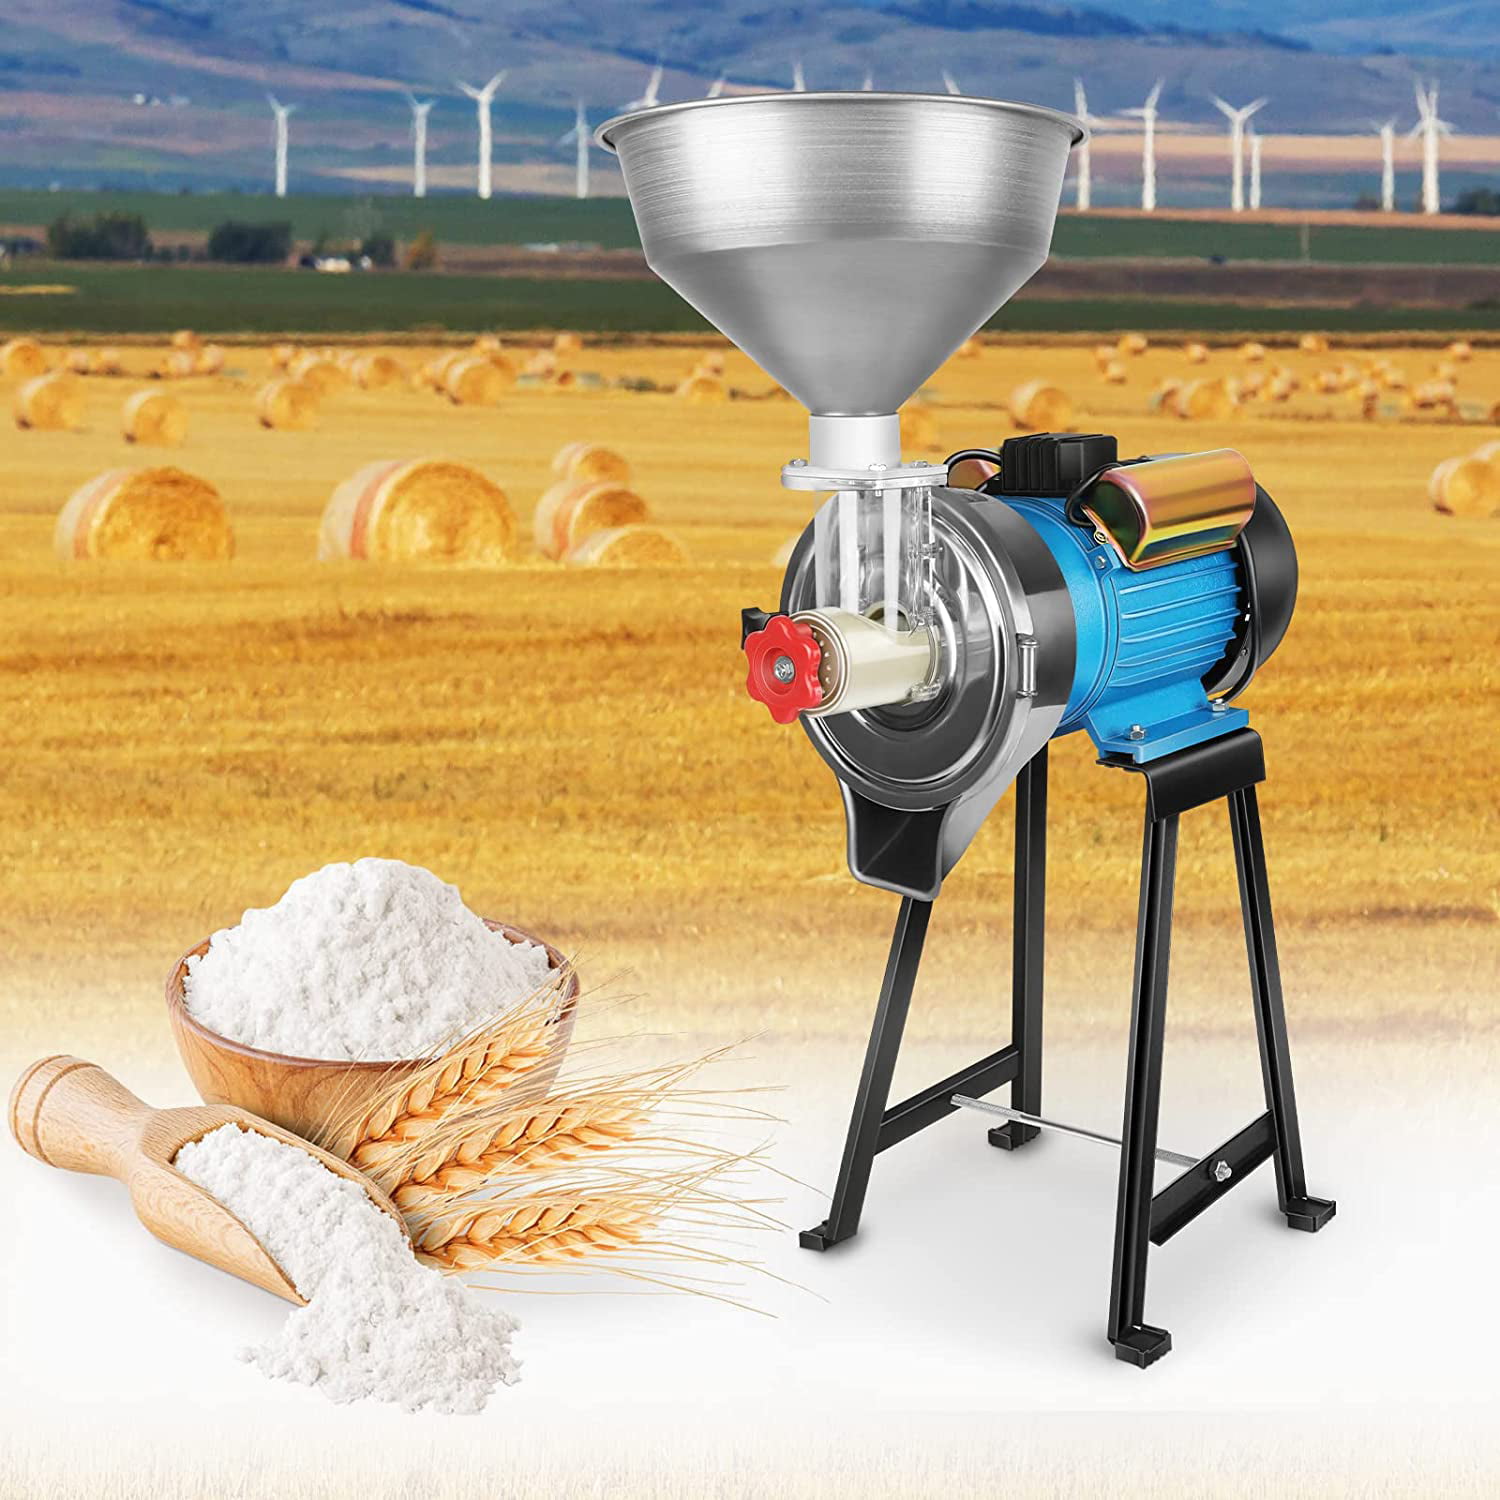 110V 2200W Electric Grain Mill Grinder Powder Machine Wet Mill Machine Grinder Feed Soymilk Wet Cereals Grinder Flour Mill Grinder for Home and Commercial Use Pu-lver-iz-er Grinding Machine 